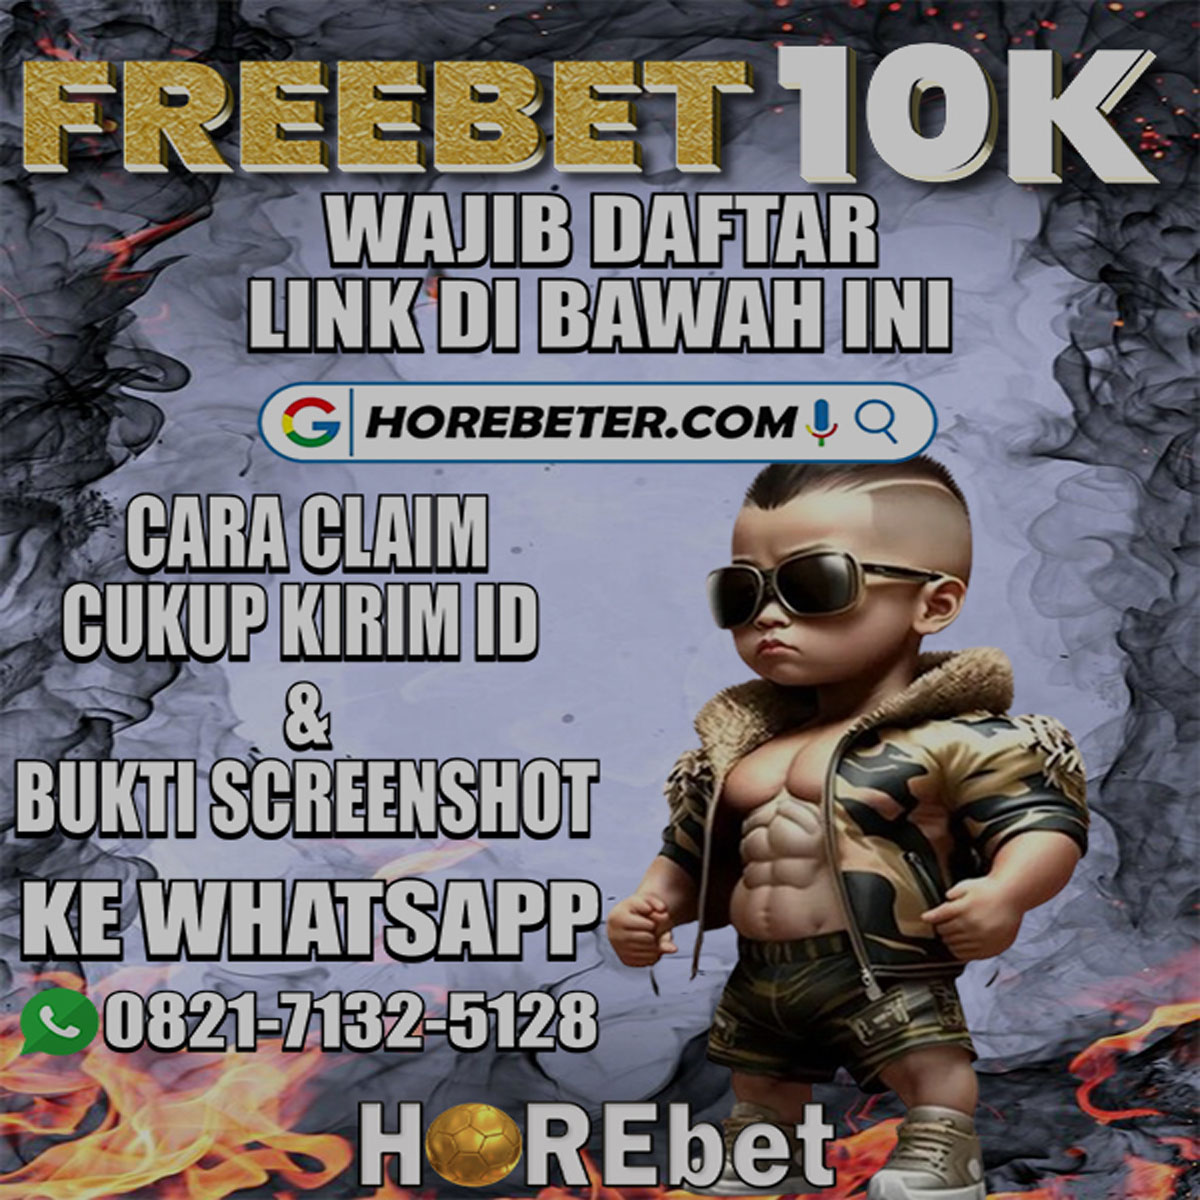 HOREBET freebet 10K